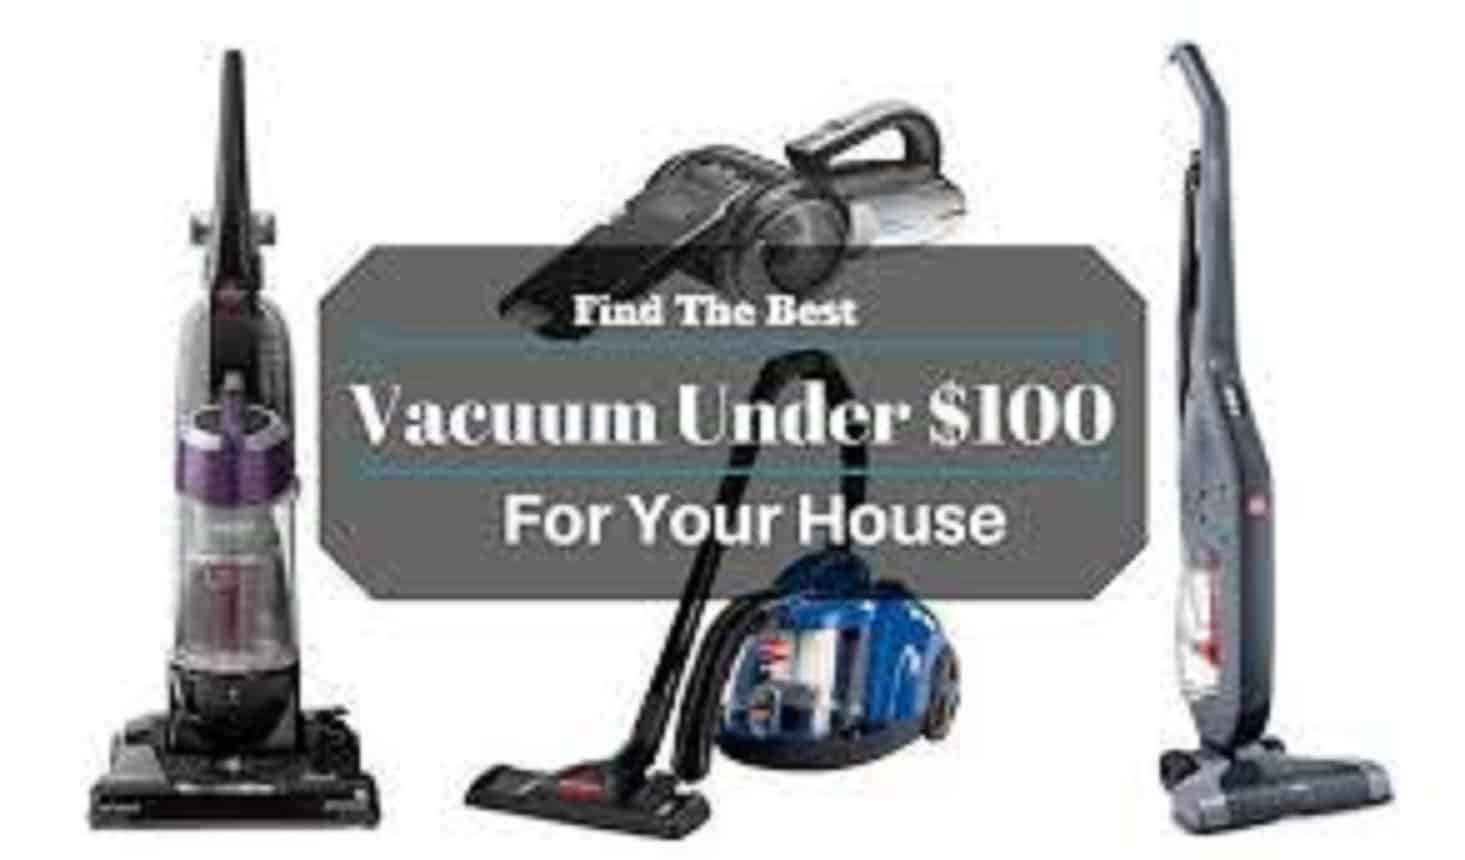 Vacuum cleaner under $100 – Buying Guide